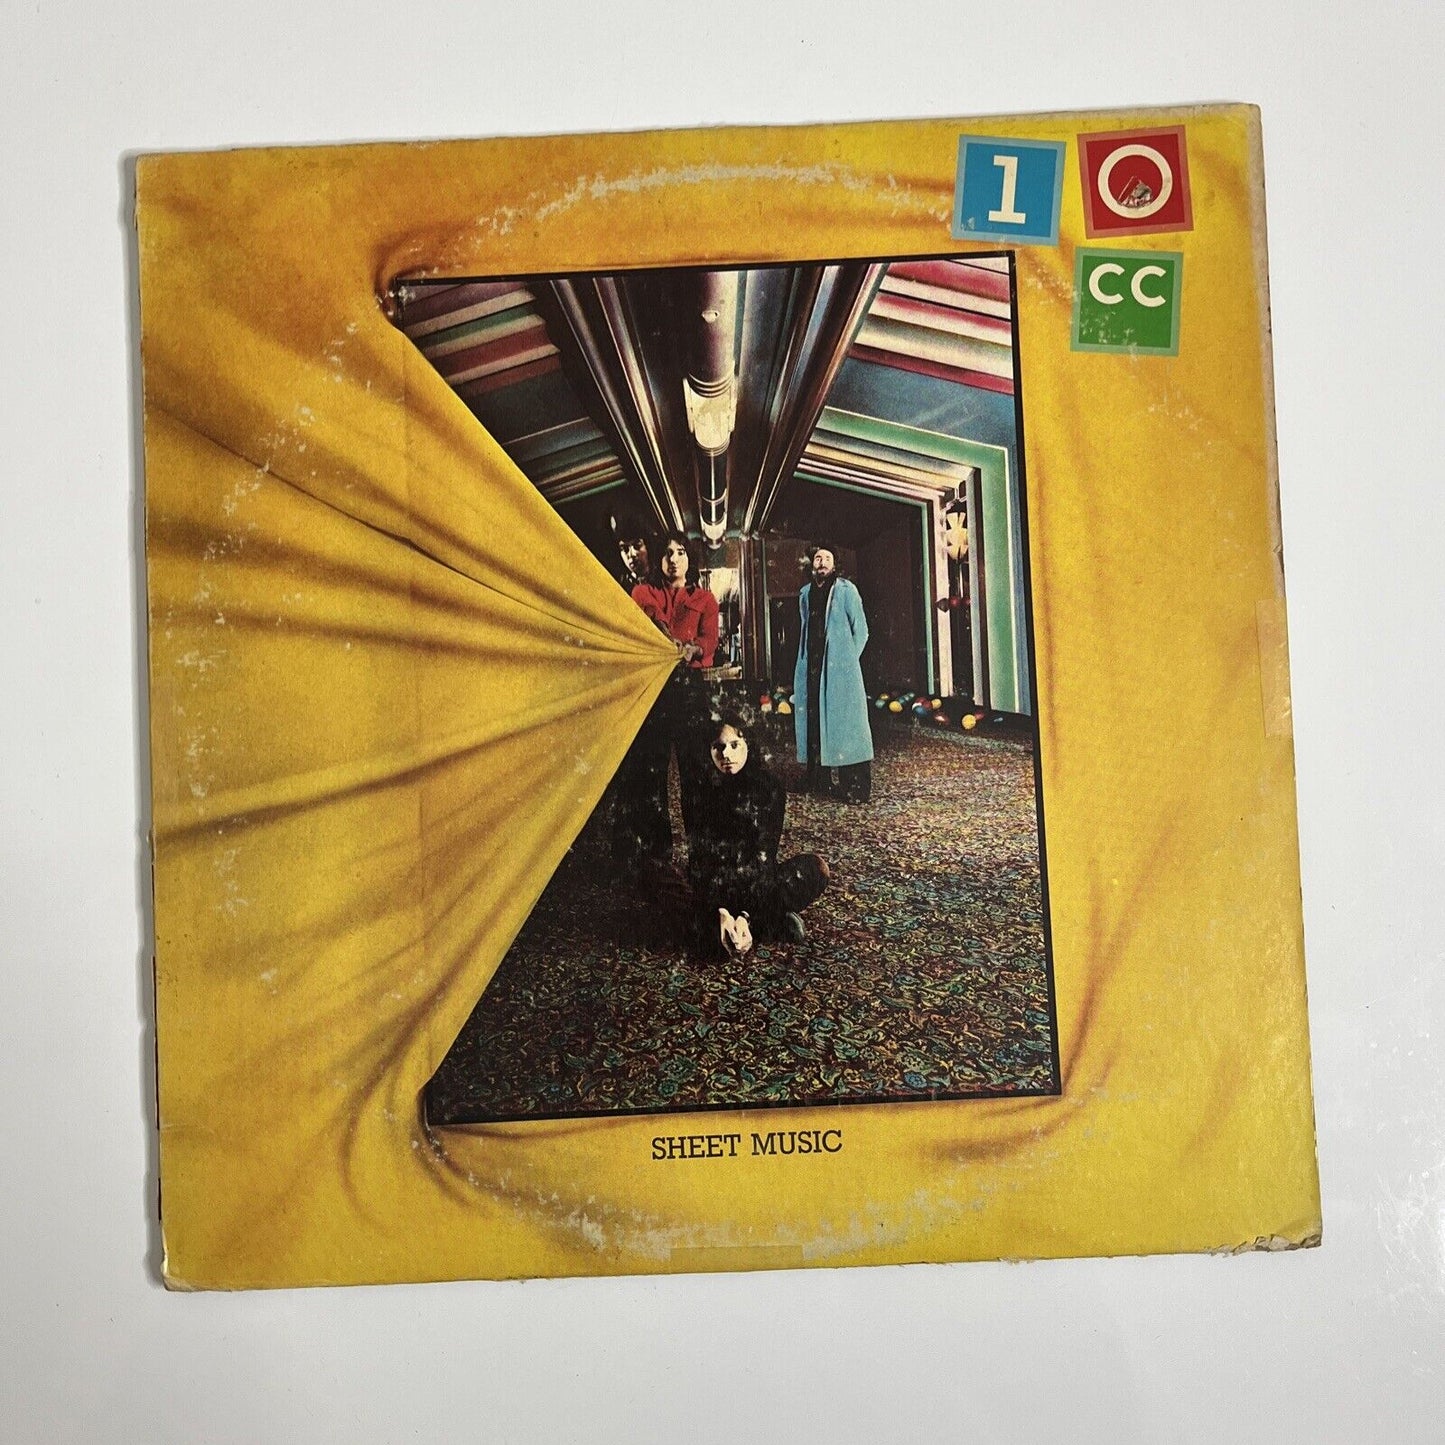 10cc – Sheet Music LP 1974 Vinyl Record SWAO-95845 – Retro Unit